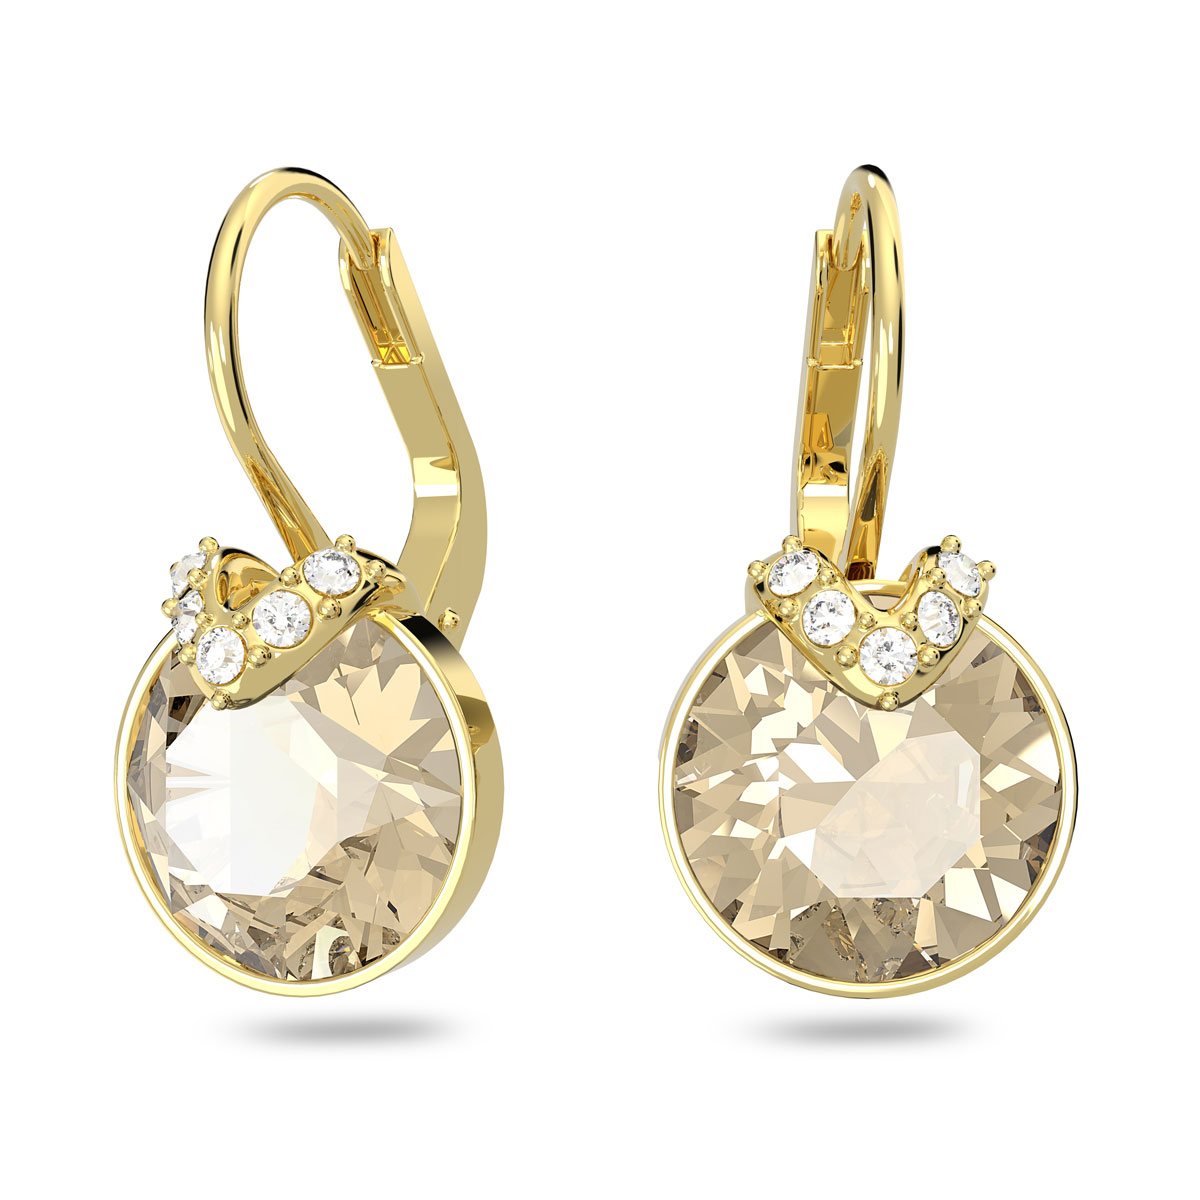 Swarovski Jewelry Bella, Pierced Earrings Drop Crystal and Gold